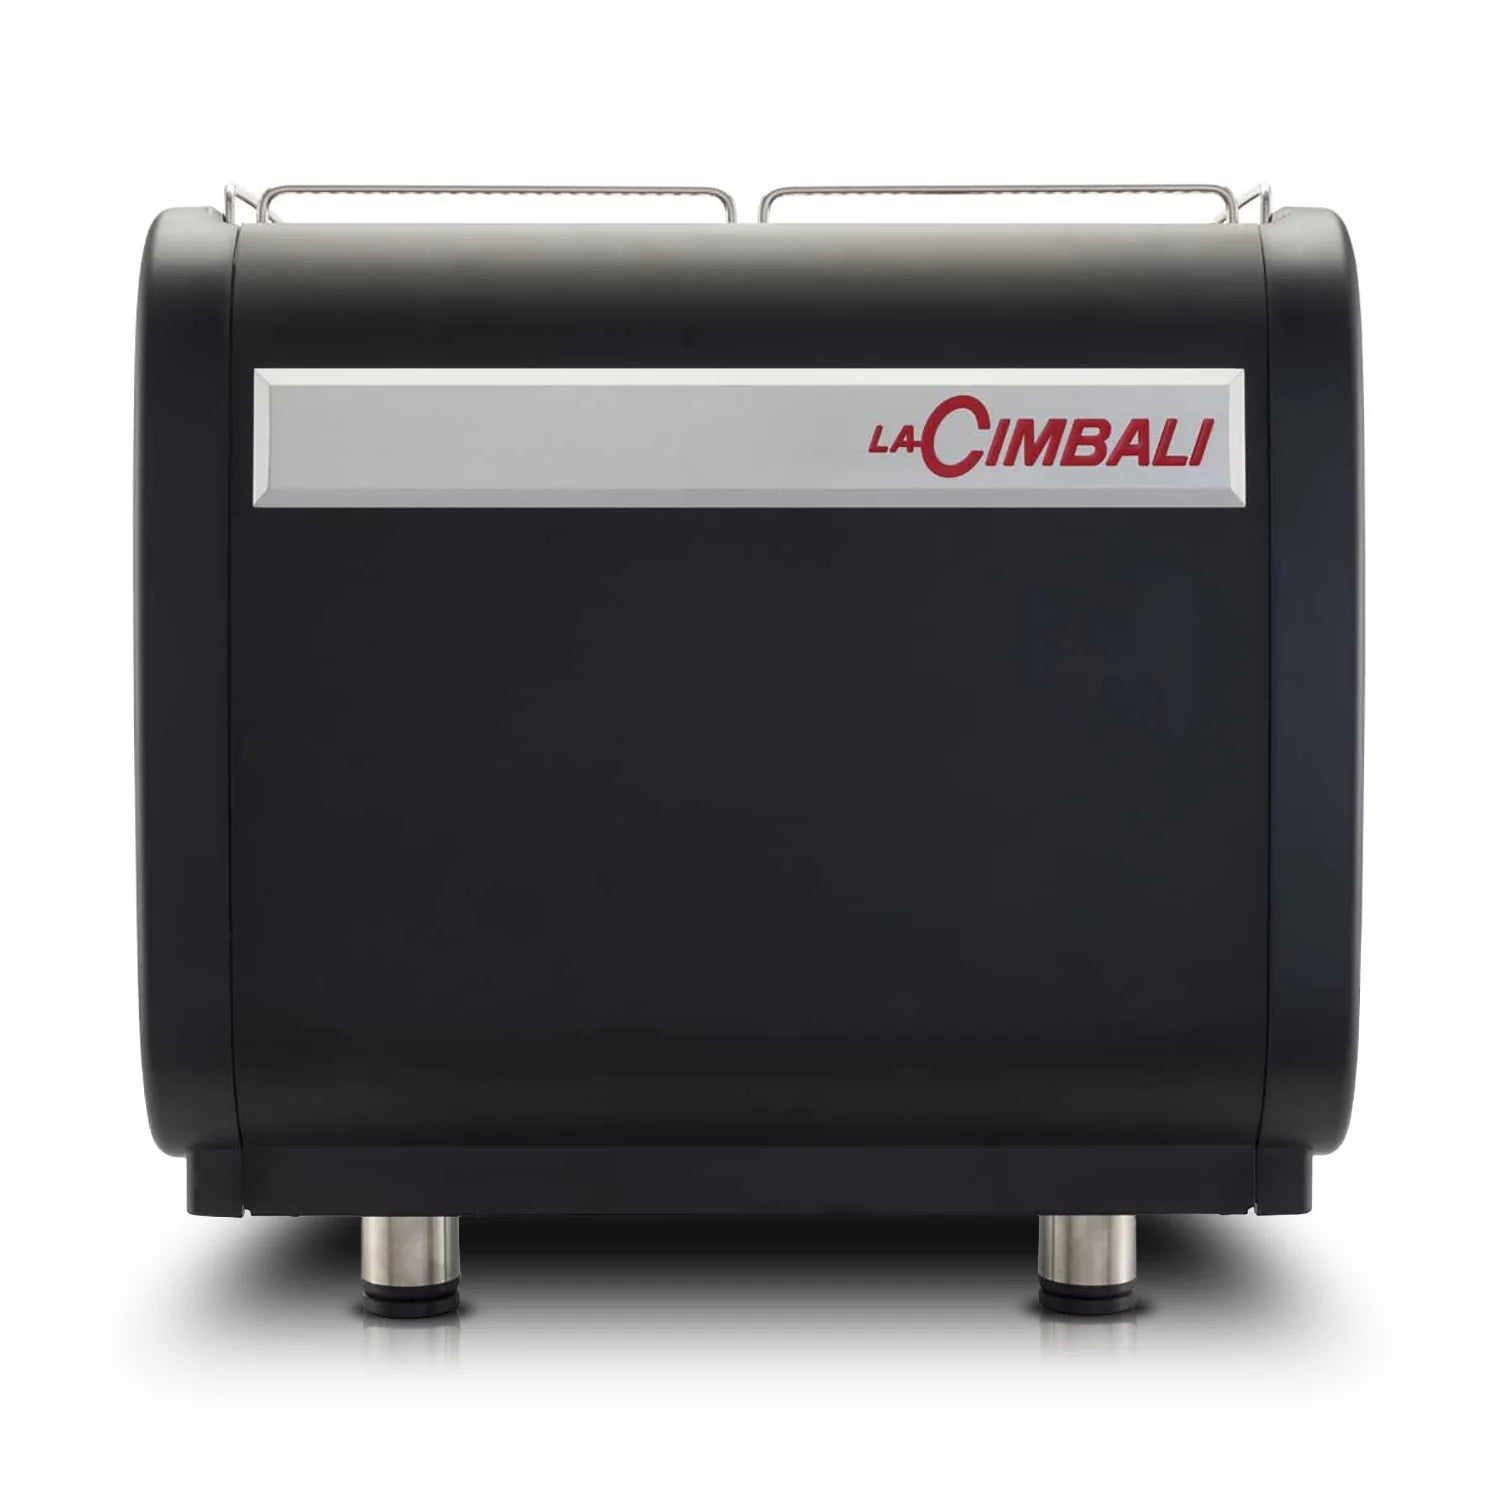 Cimbali M26 BE Compact 2 Group | Steam Wand Regular